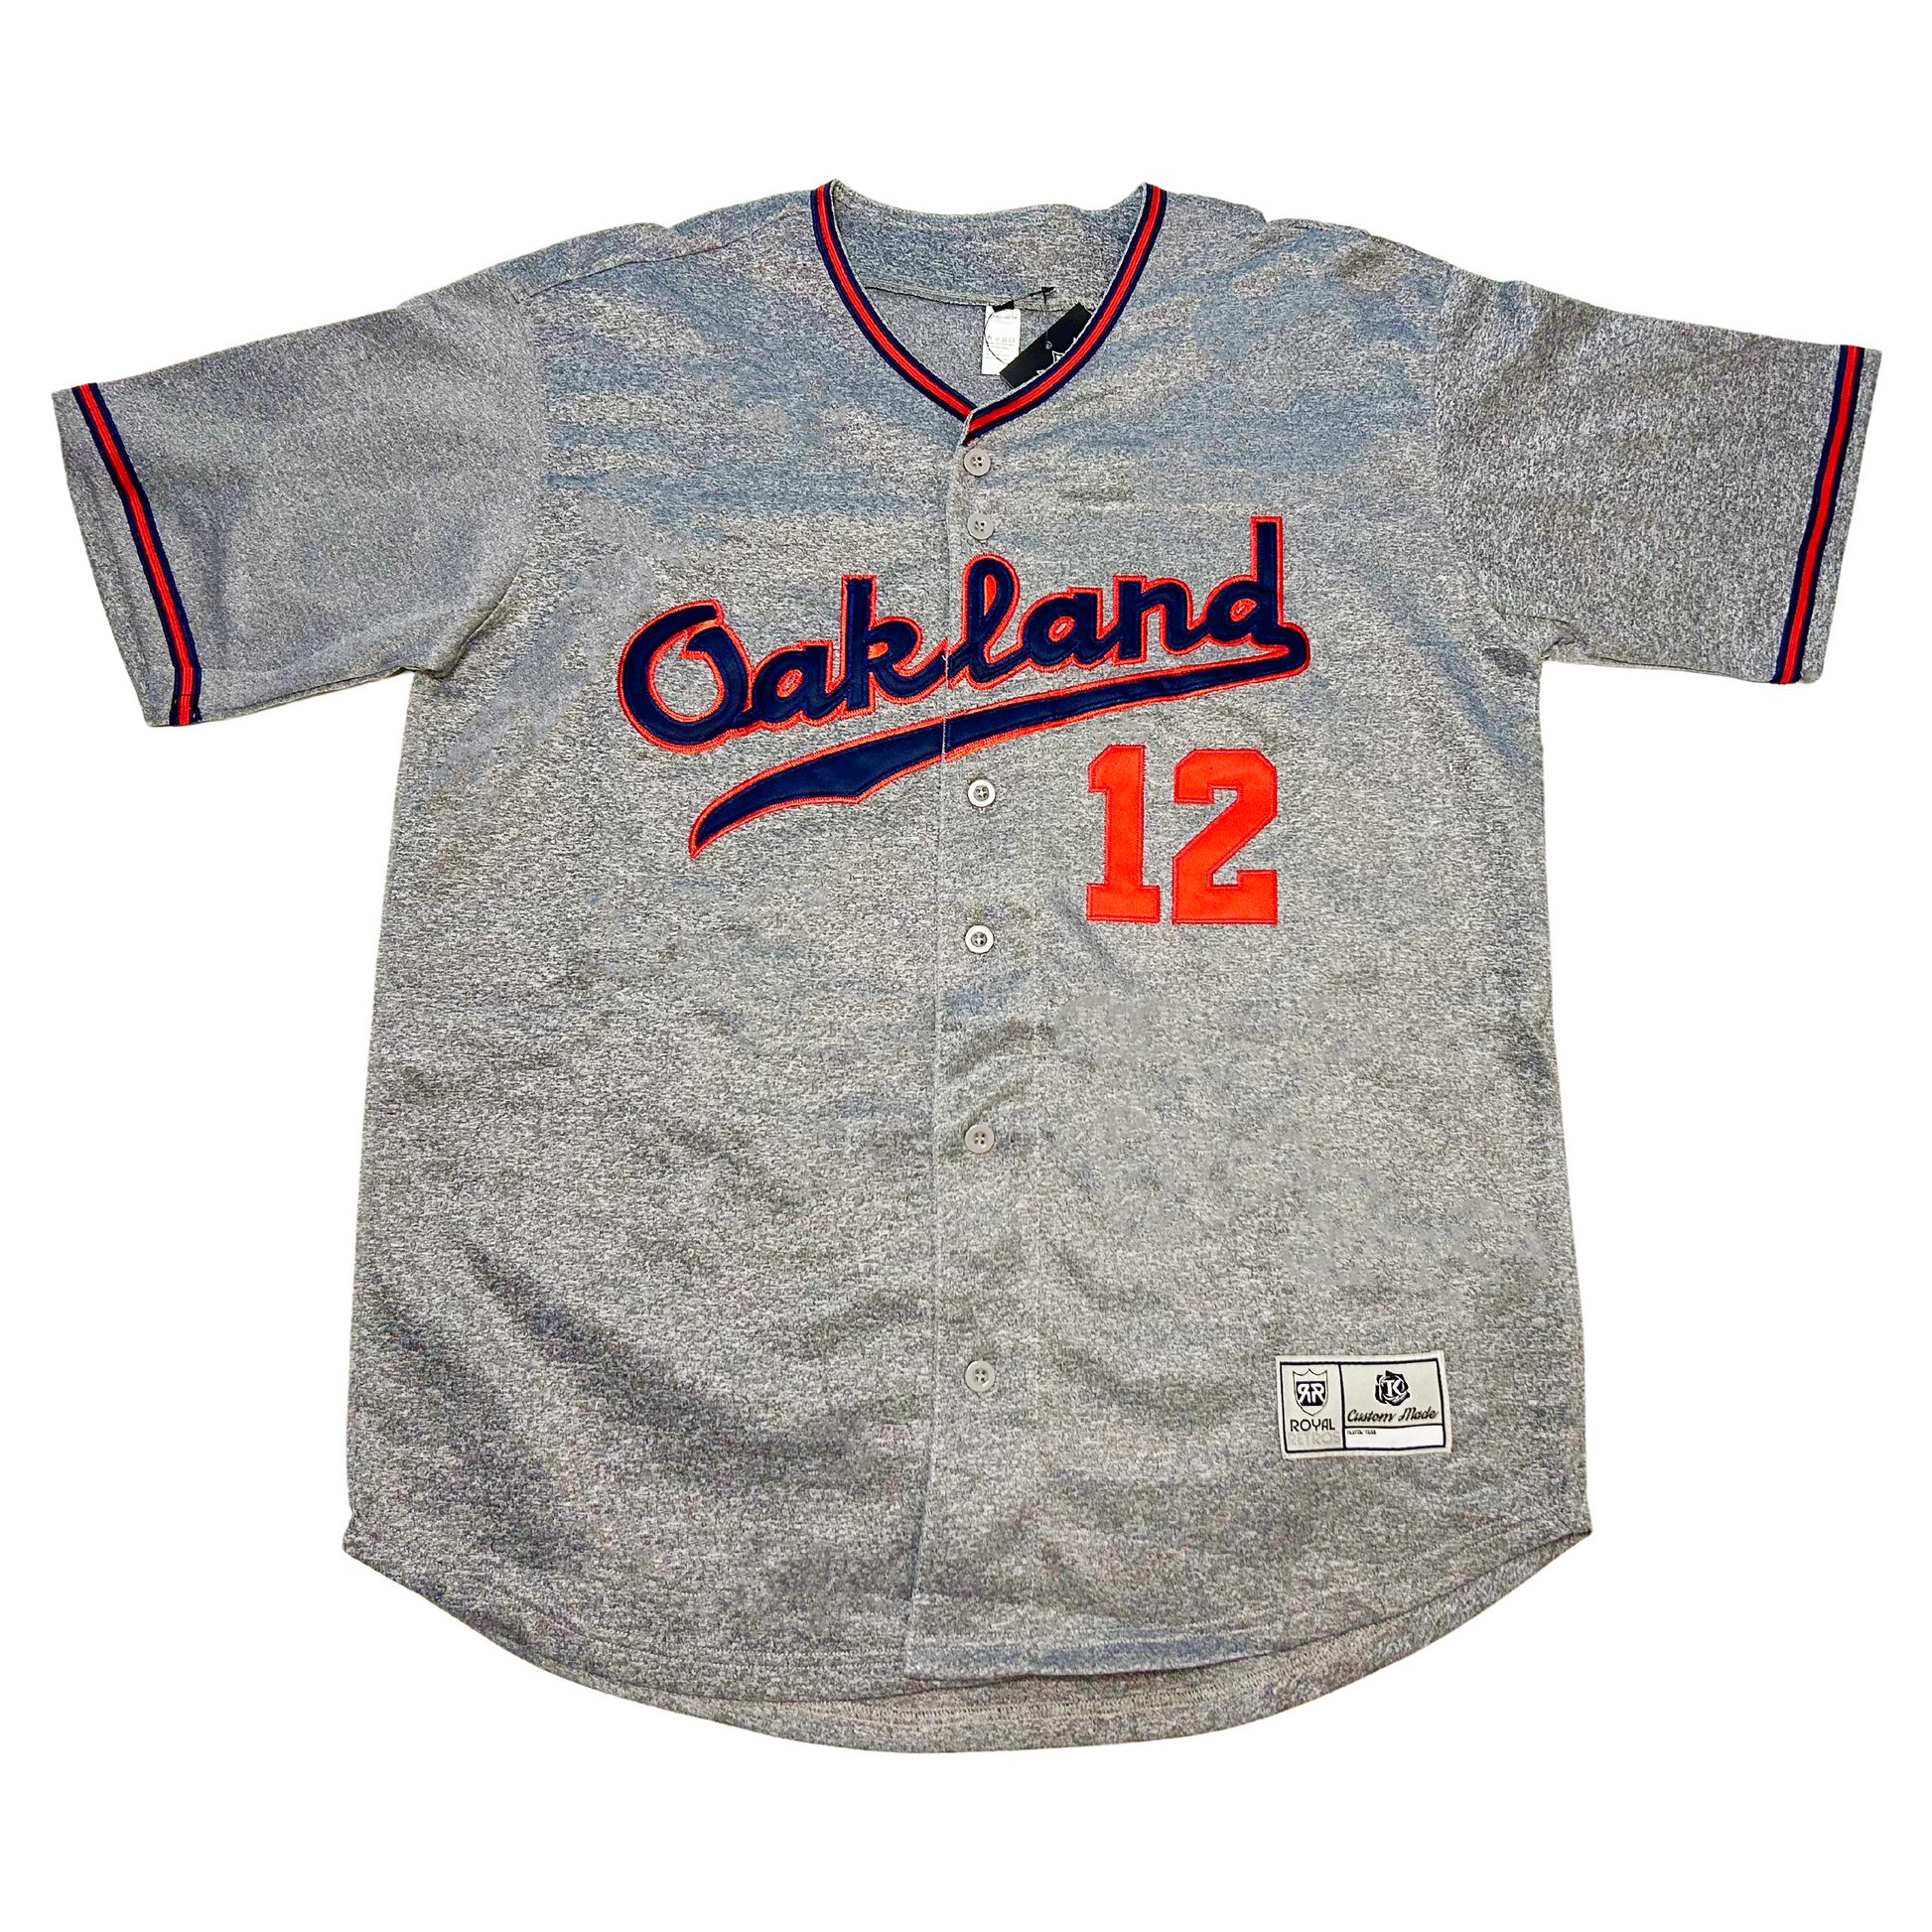 Oakland Oaks Baseball Jersey - Cream - 2XL - Royal Retros